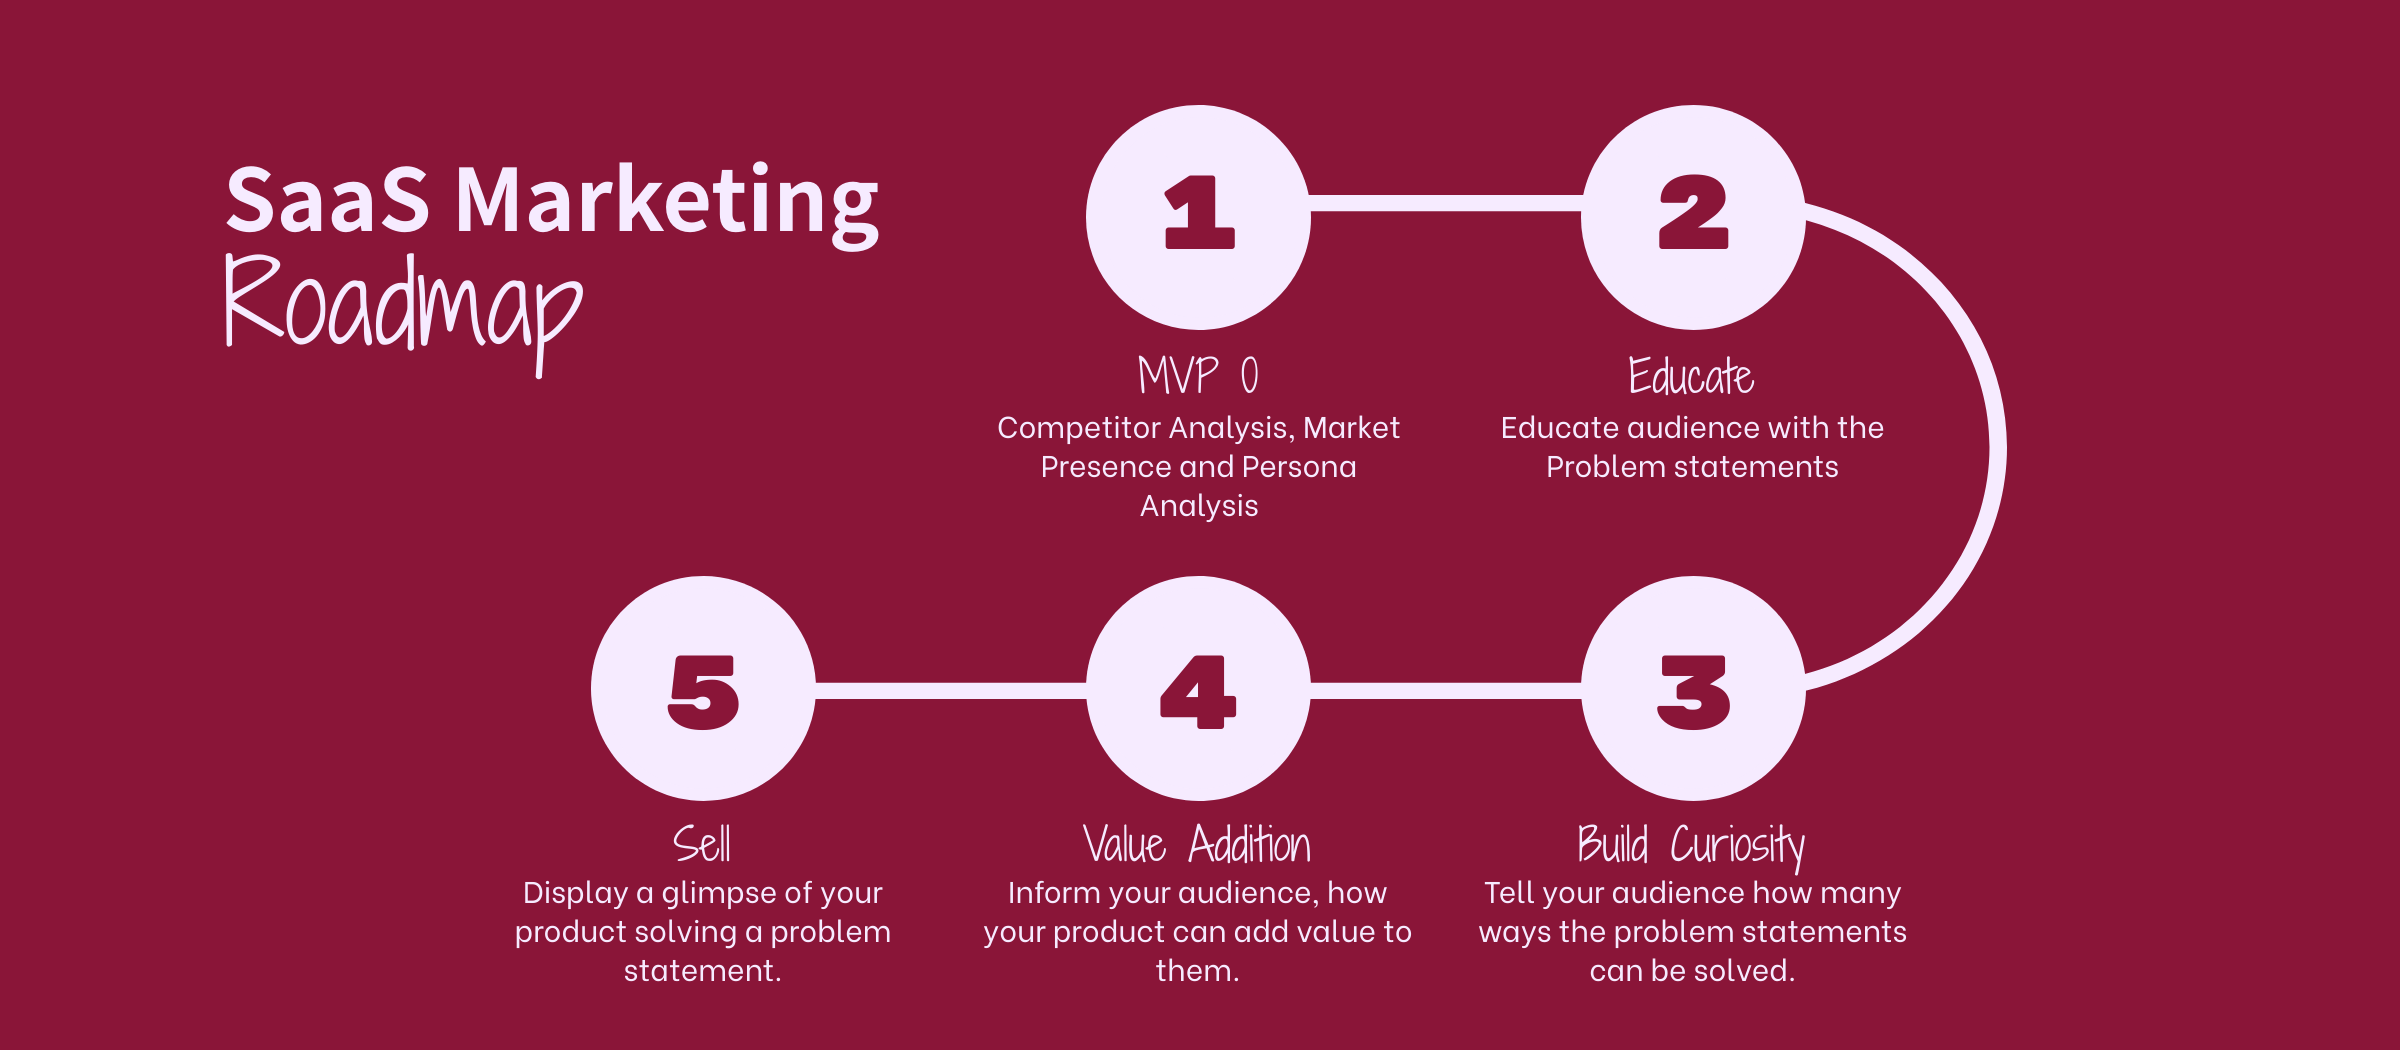 SaaS Marketing Roadmap